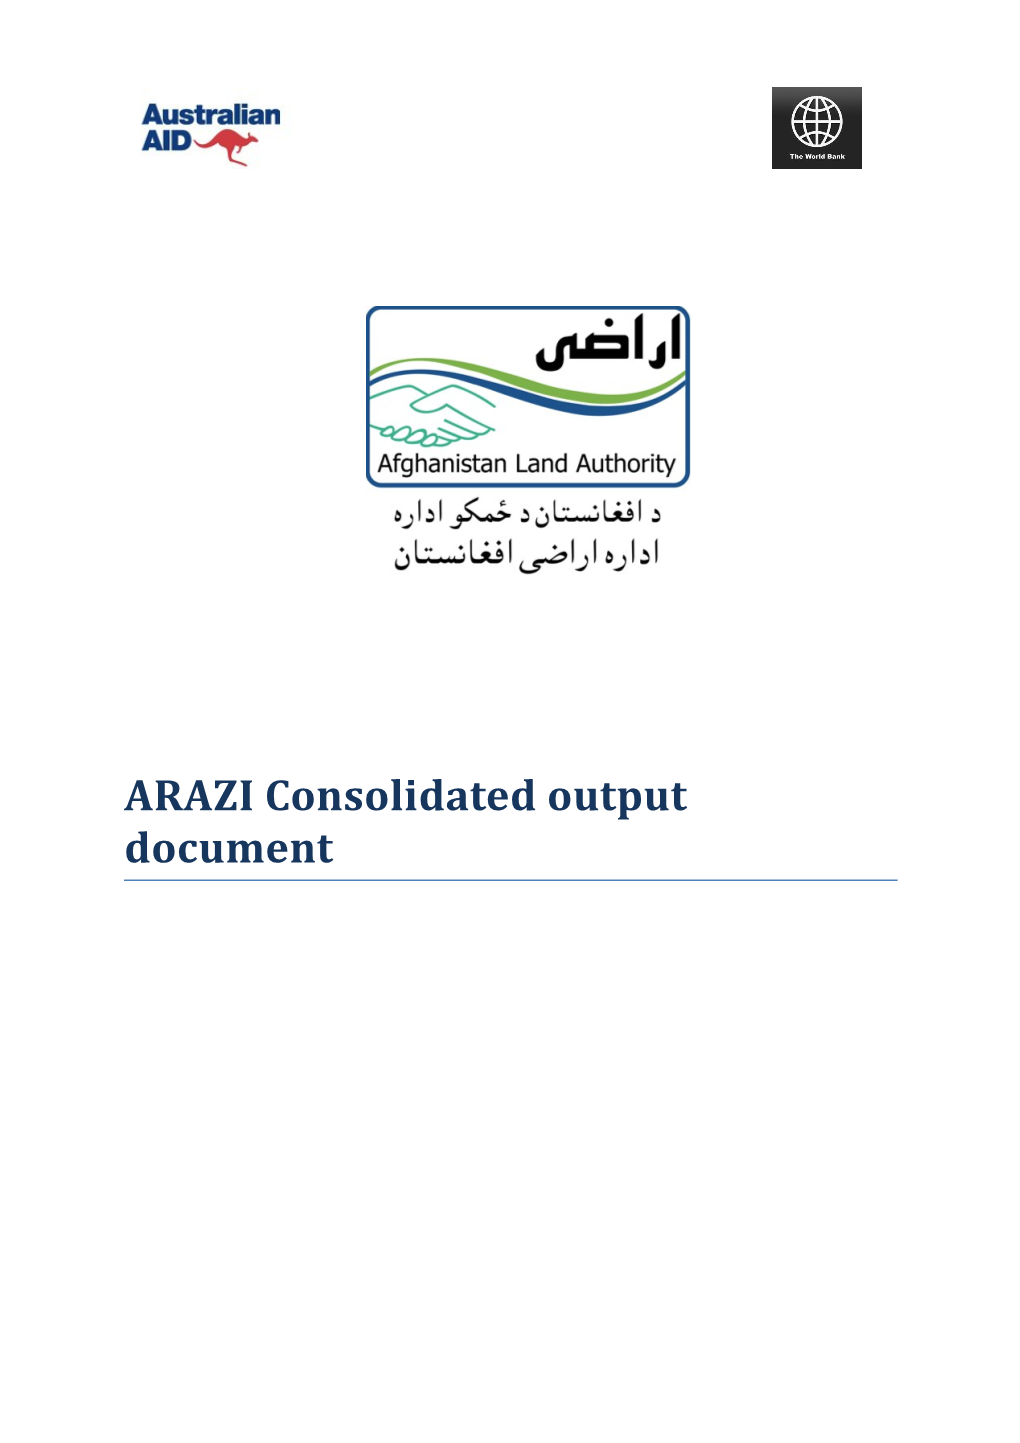 ARAZI Consolidated Output Document